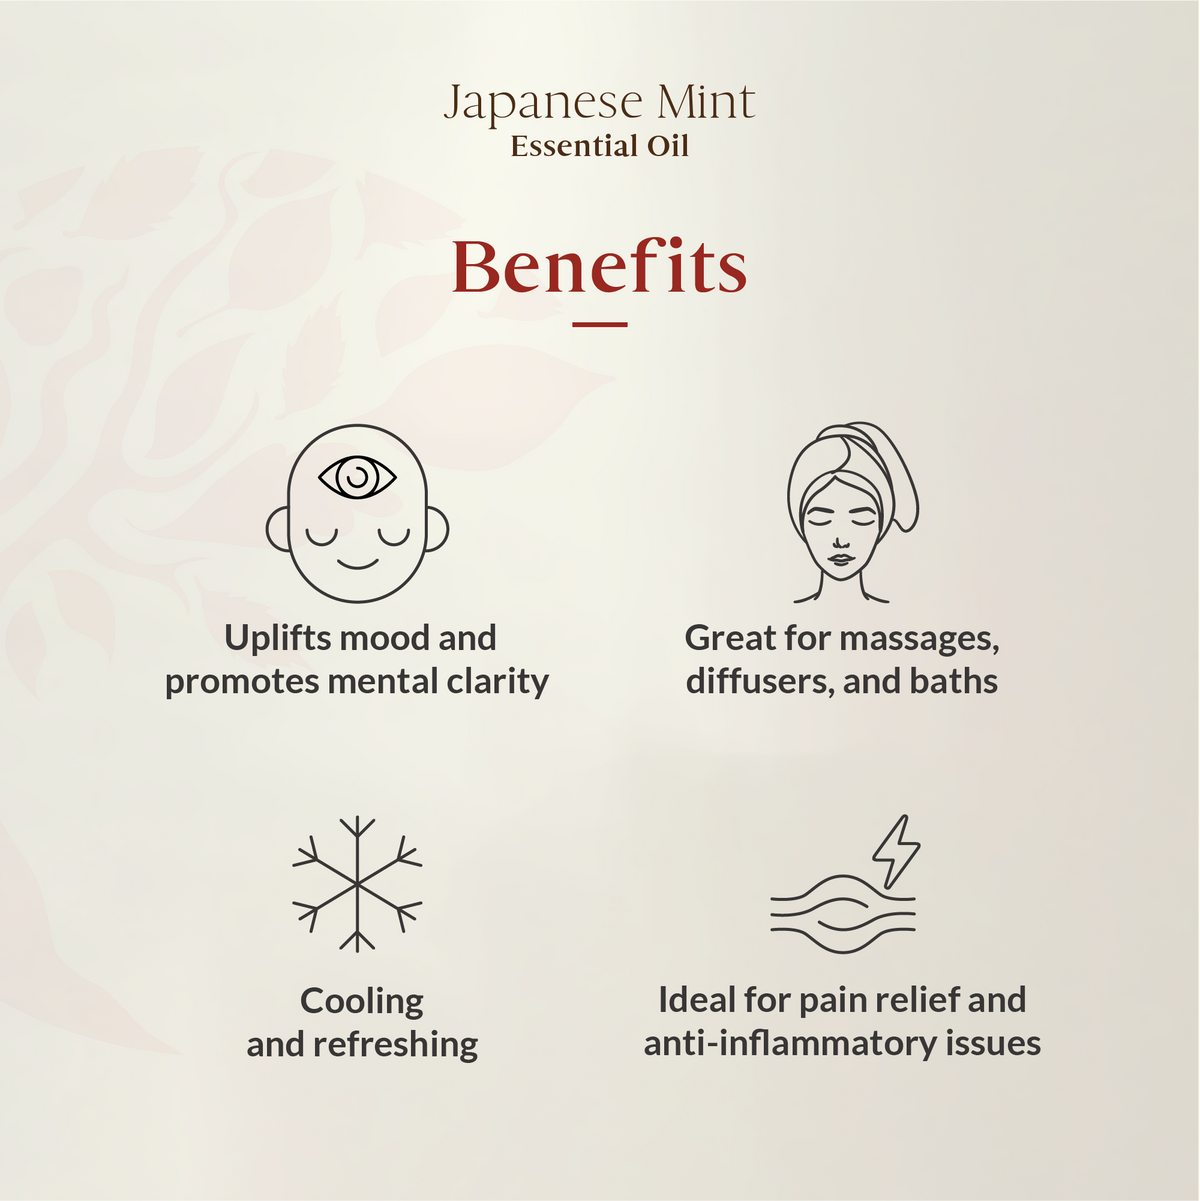 Japanese Mint Essential Oil 15ml